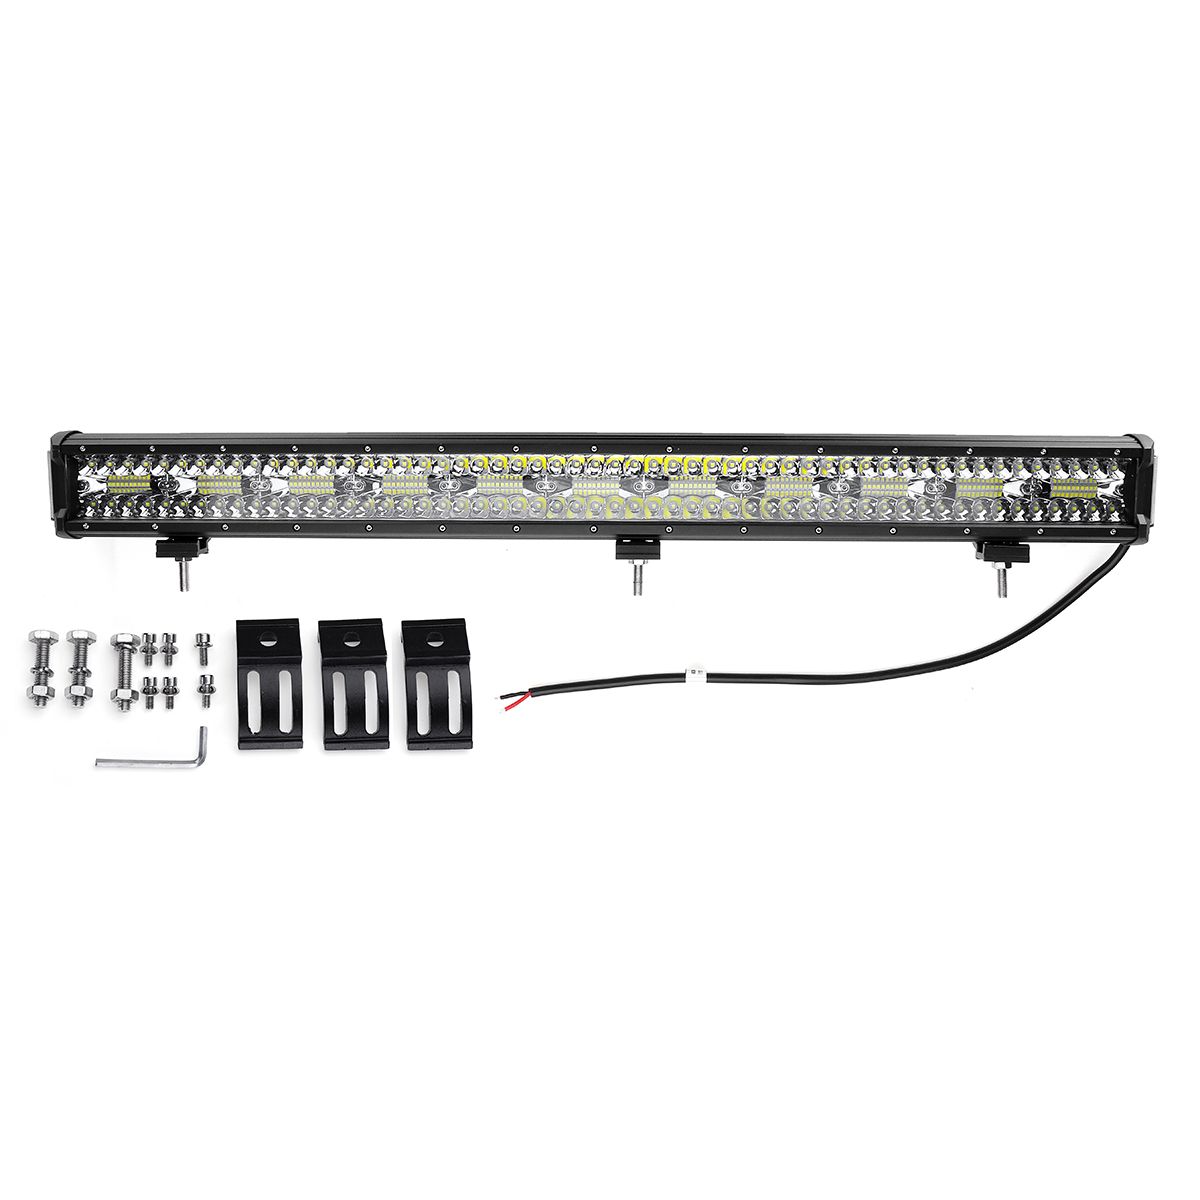 32Inch-Side-Shooter-LED-Work-Light-Bars-Combo-Beam-Driving-Fog-Lamp-708W-70800LM-for-Off-Road-ATV-1403543